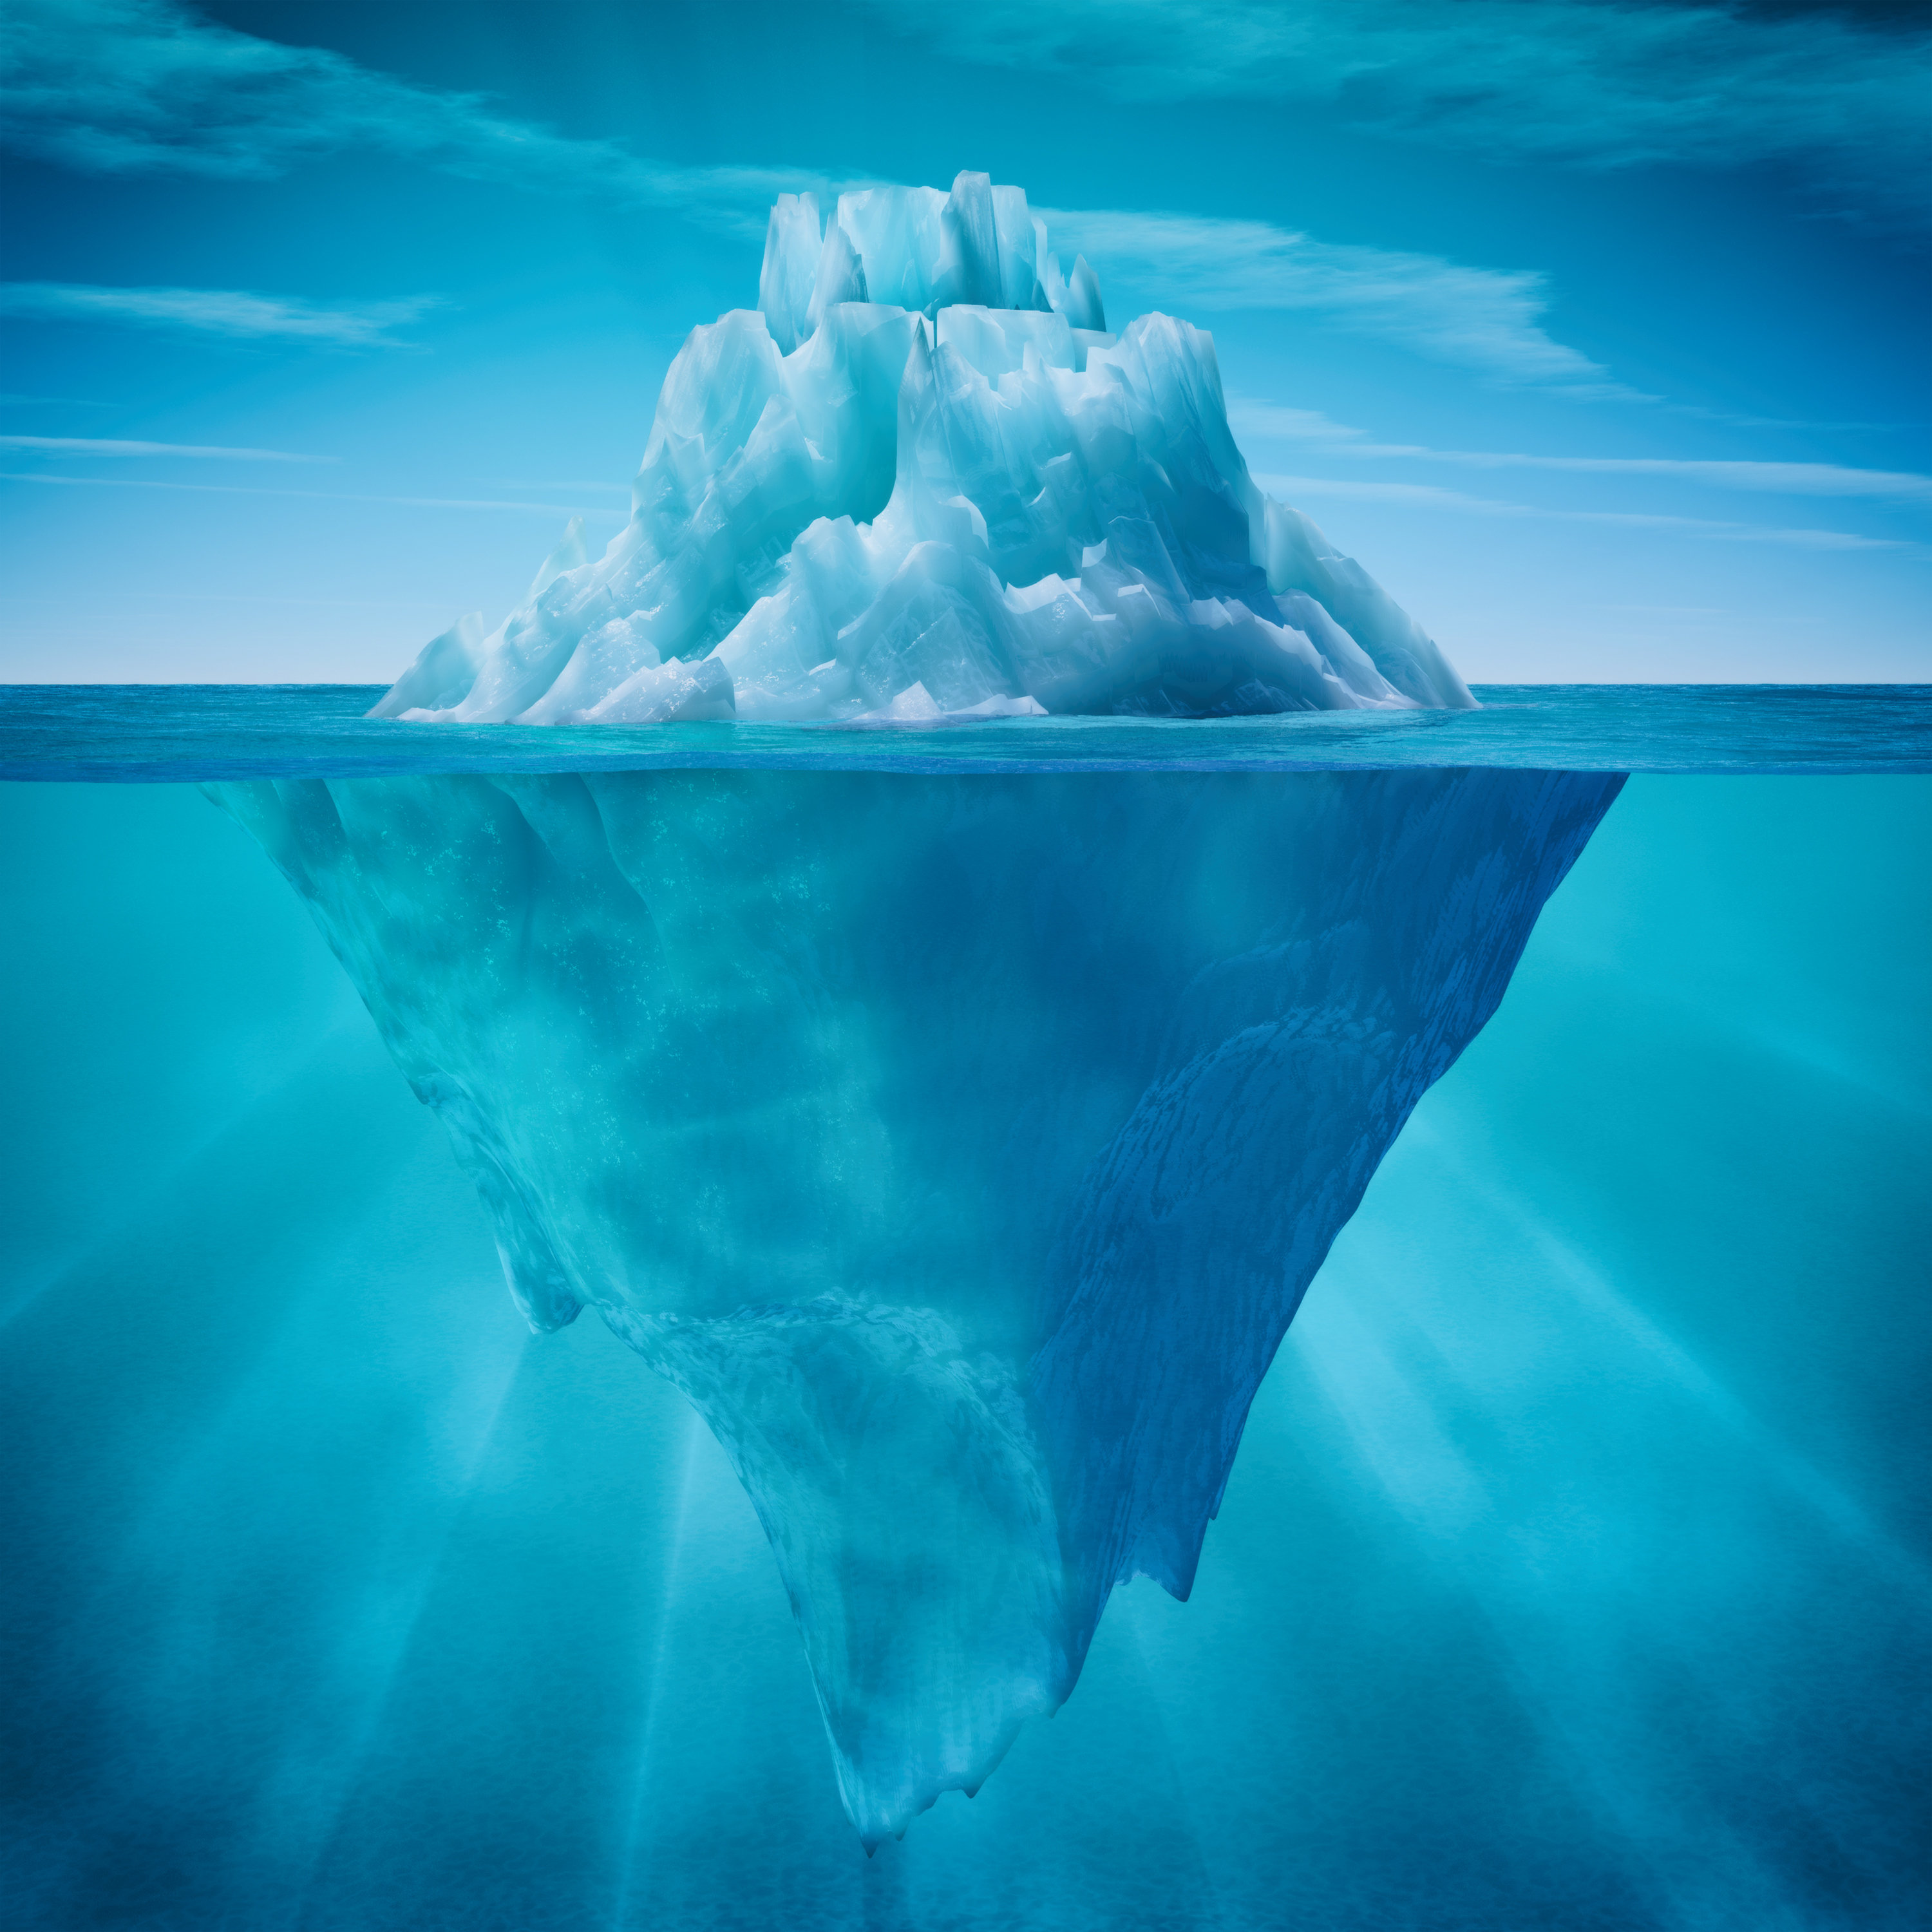 Ebern Designs Underwater Iceberg On Canvas Print | Wayfair